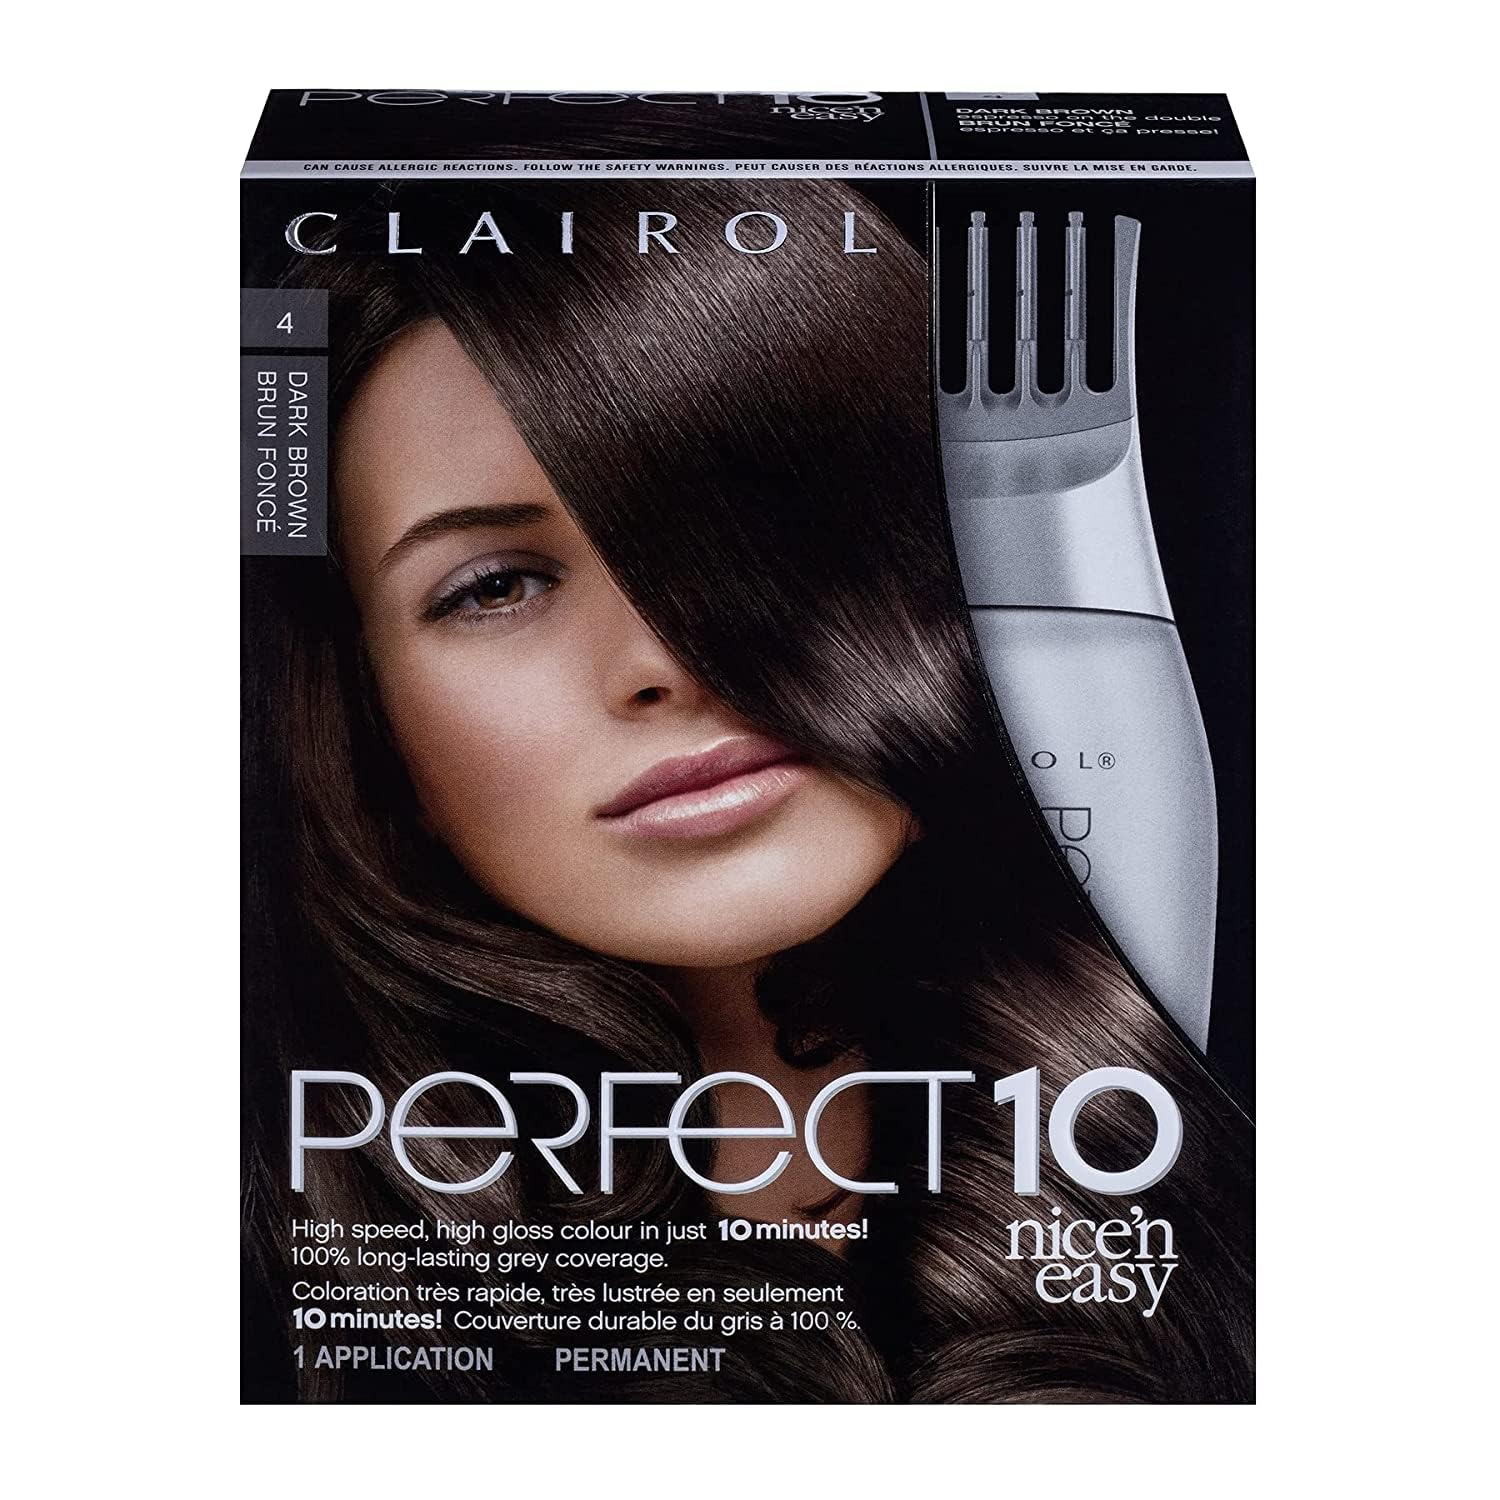 Clairol Nice'n Easy Perfect 10 Permanent Hair Dye, 4 [...]